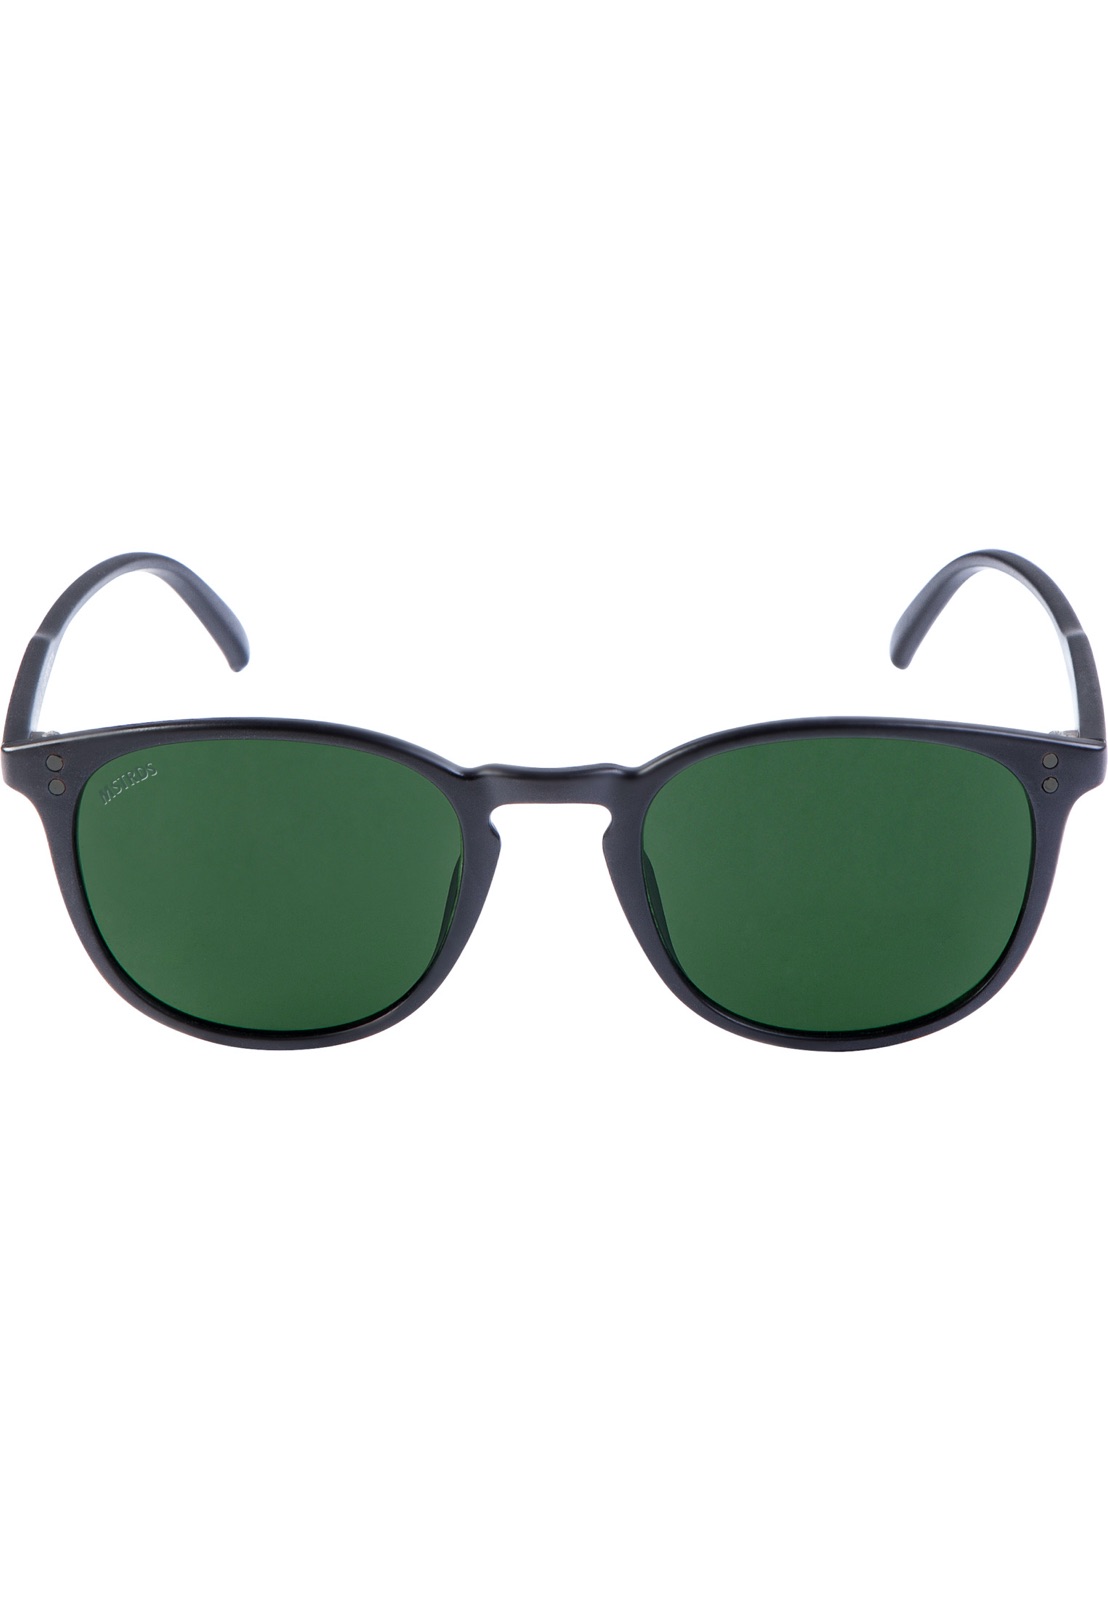 - Sunglasses Turtex GmbH Arthur